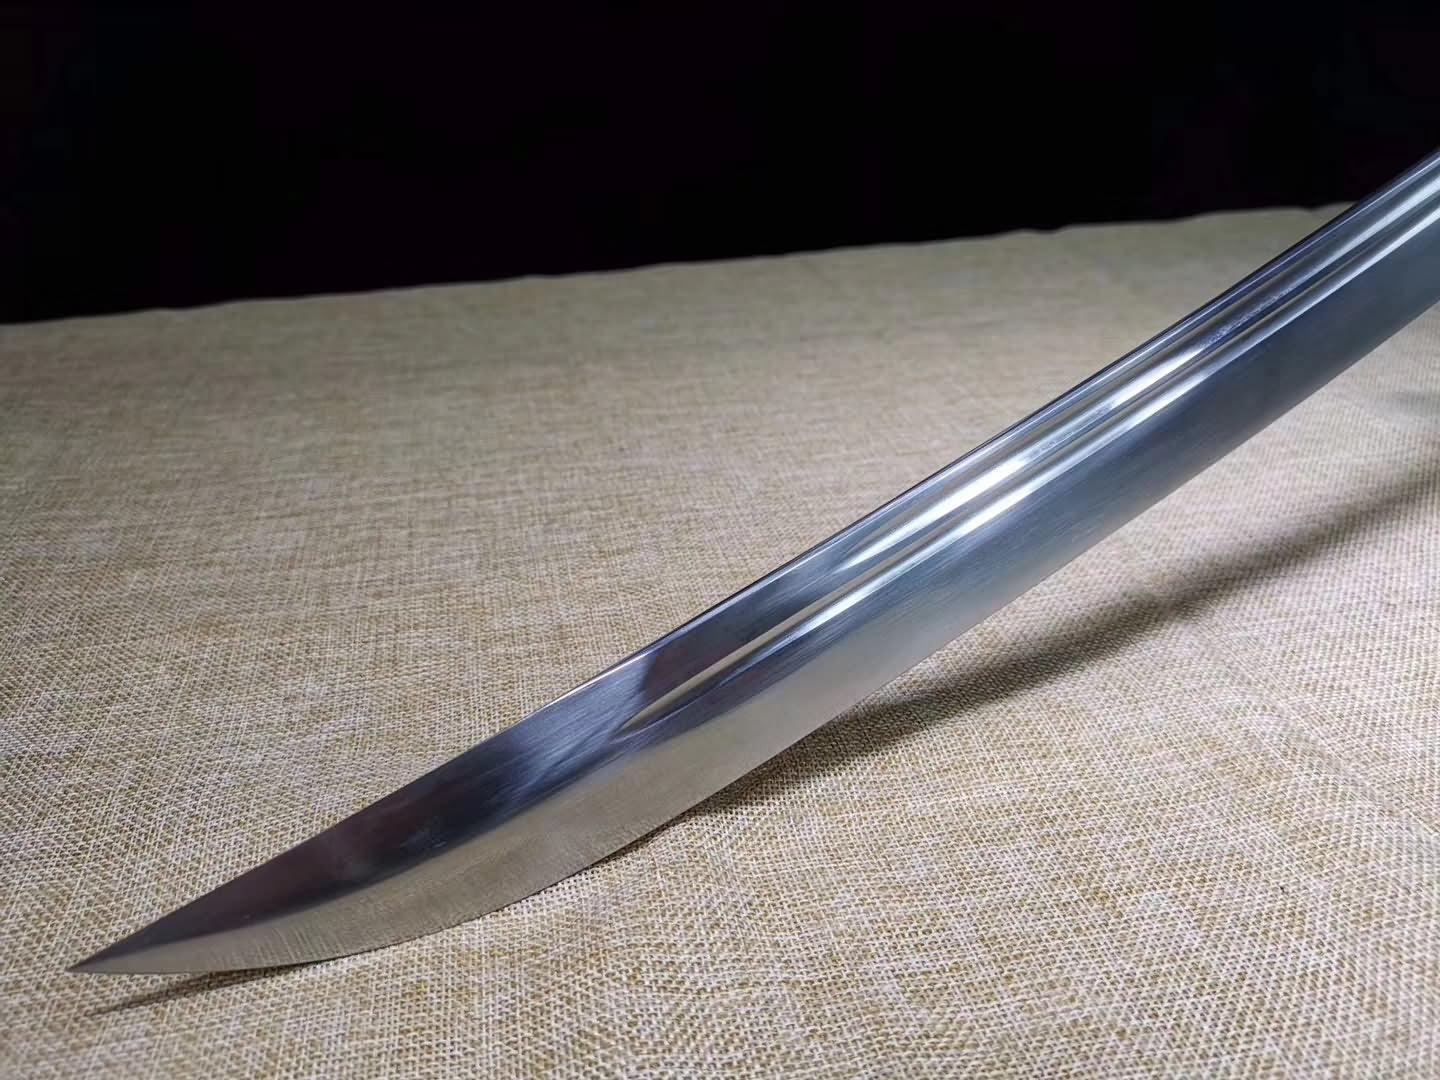 Broadsword,High carbon steel blade,Black wood scabbard - Chinese sword shop